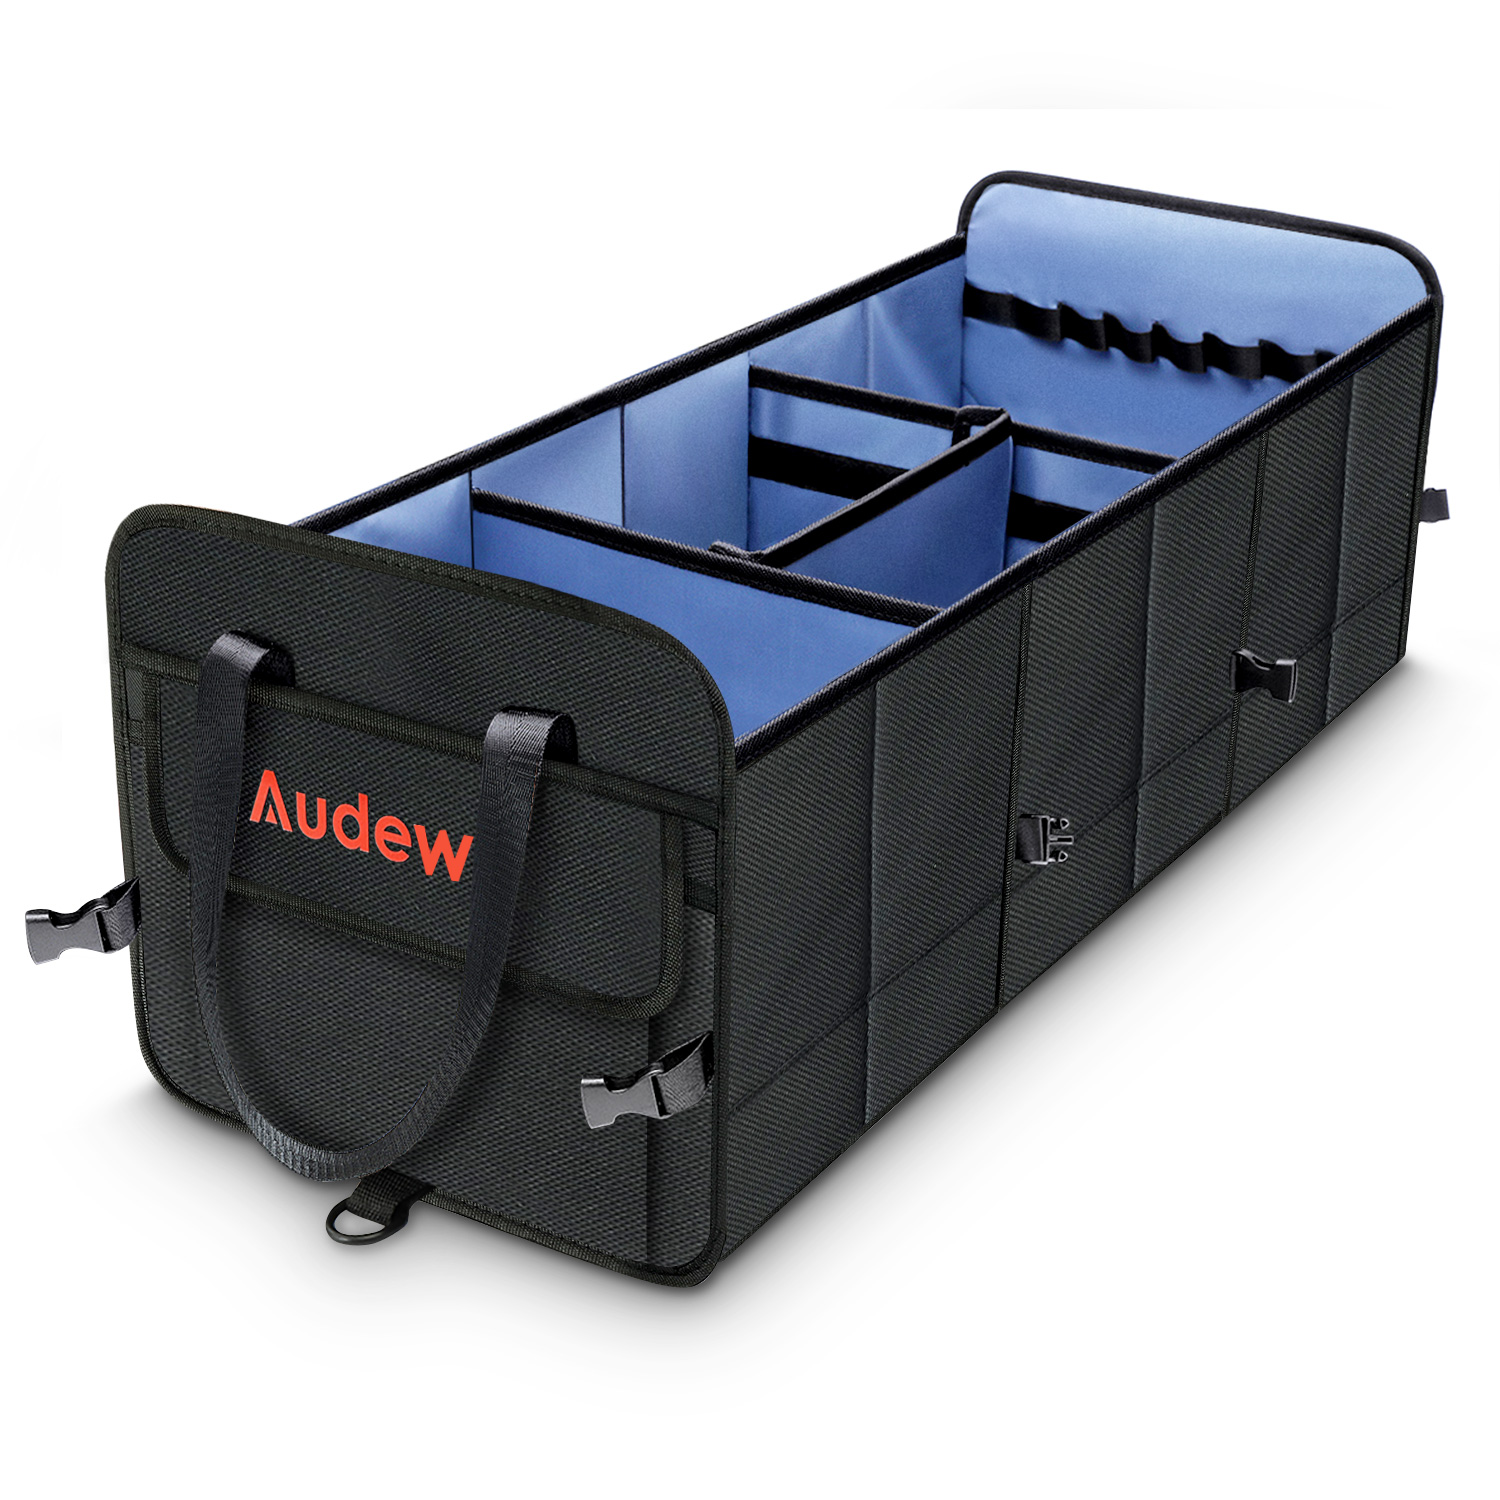 Audew Trunk Organizer Portable Car Storage Bag, Large Space to Store  Belongings